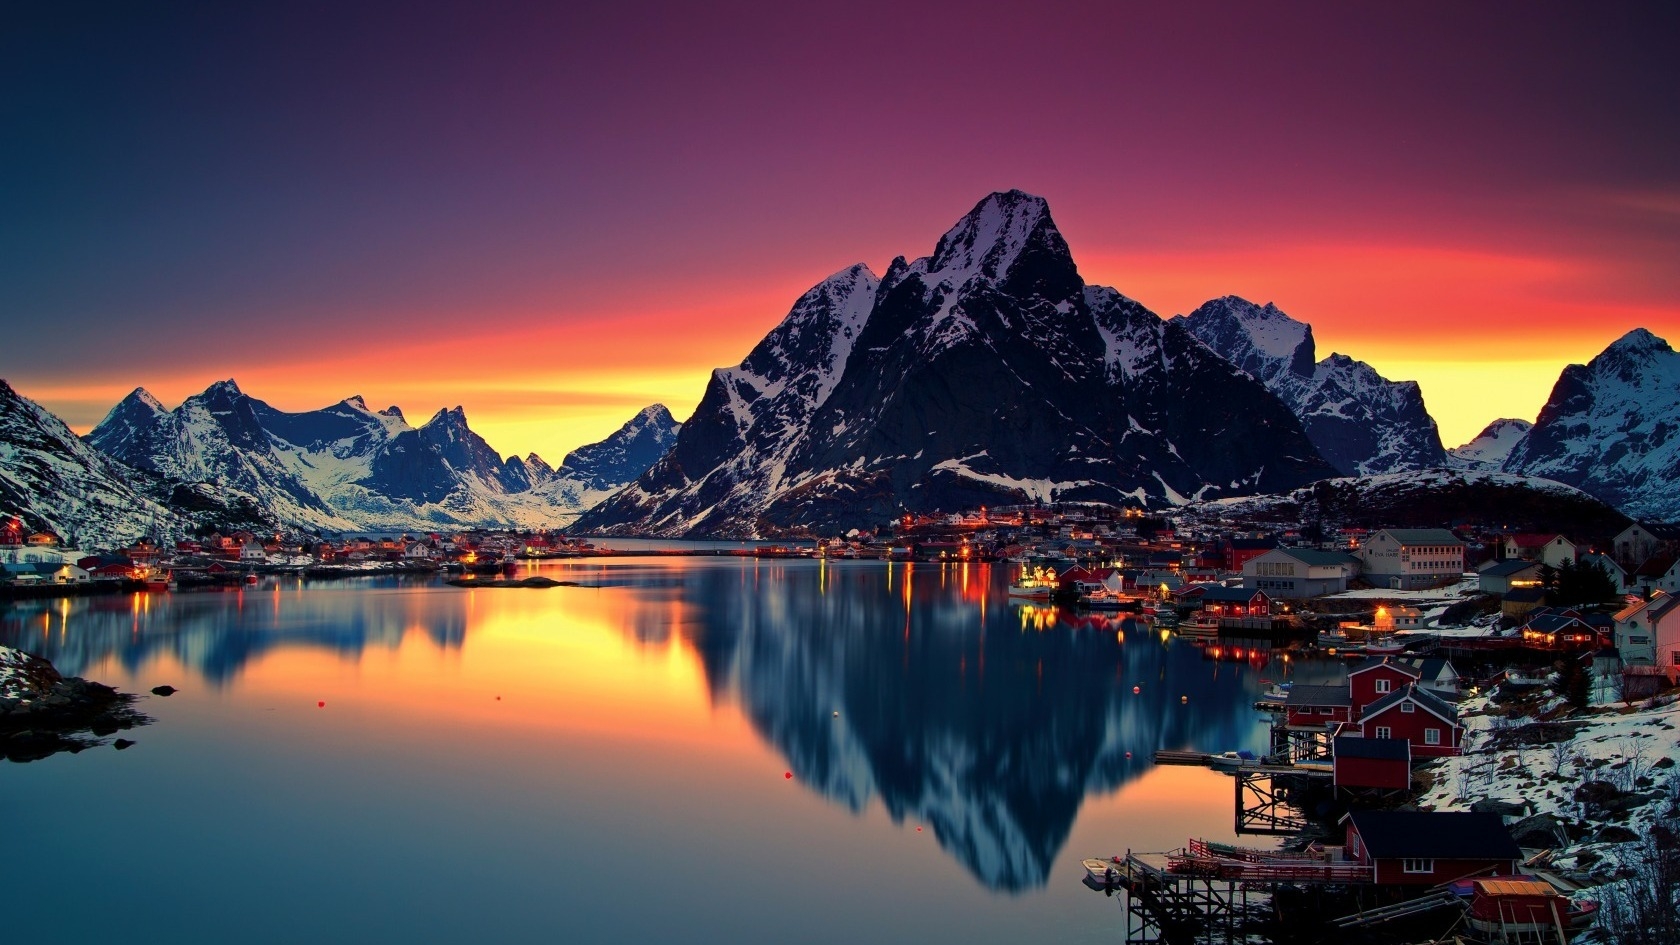 Night Lofoten Islands Norway for 1680 x 945 HDTV resolution